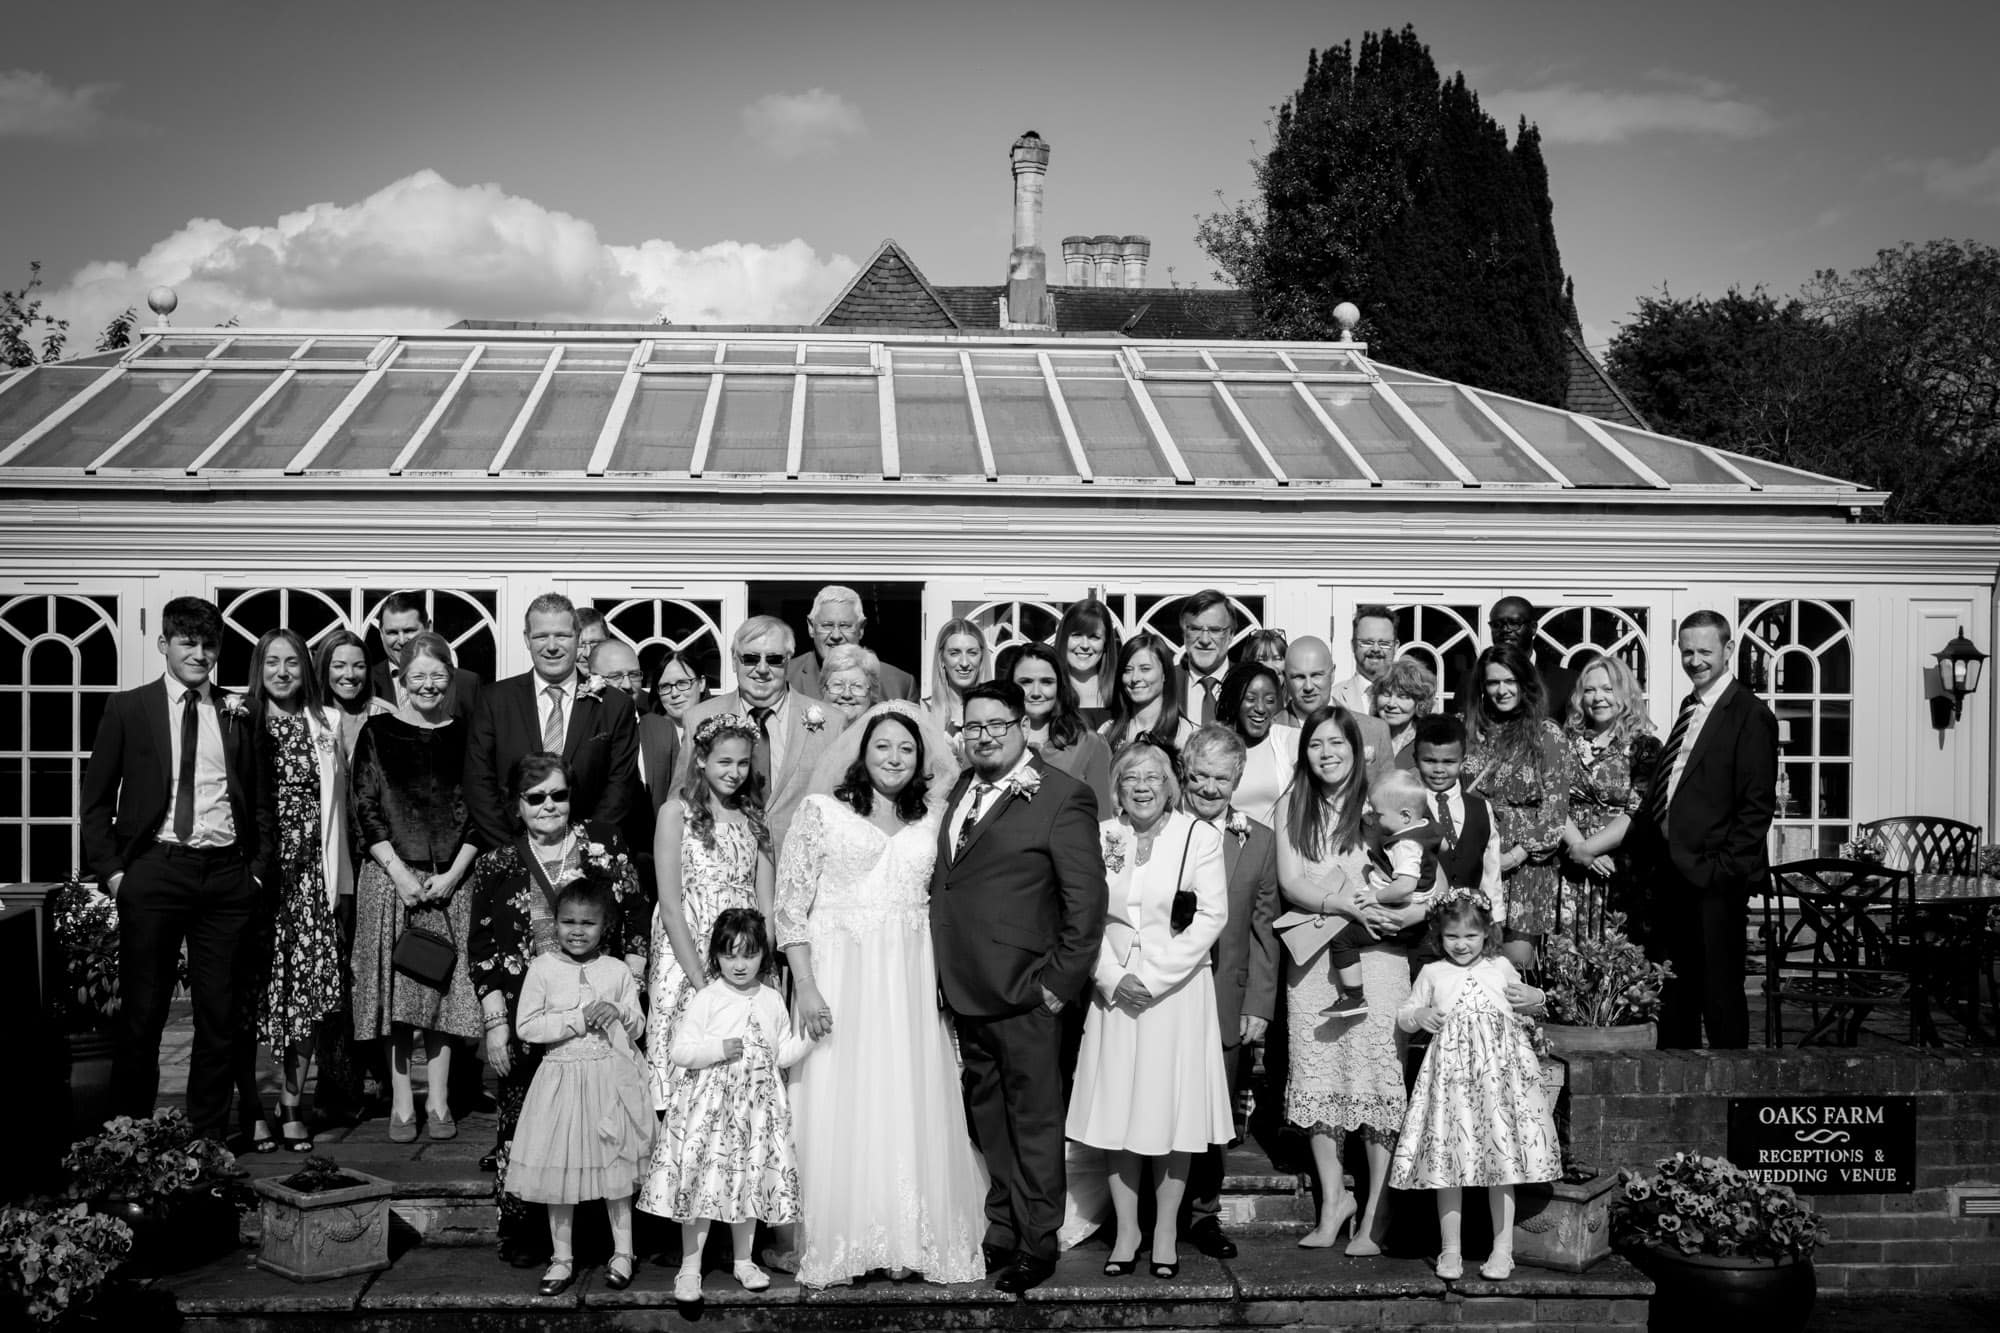 Group photo at wedding at Oaks Farm Weddings